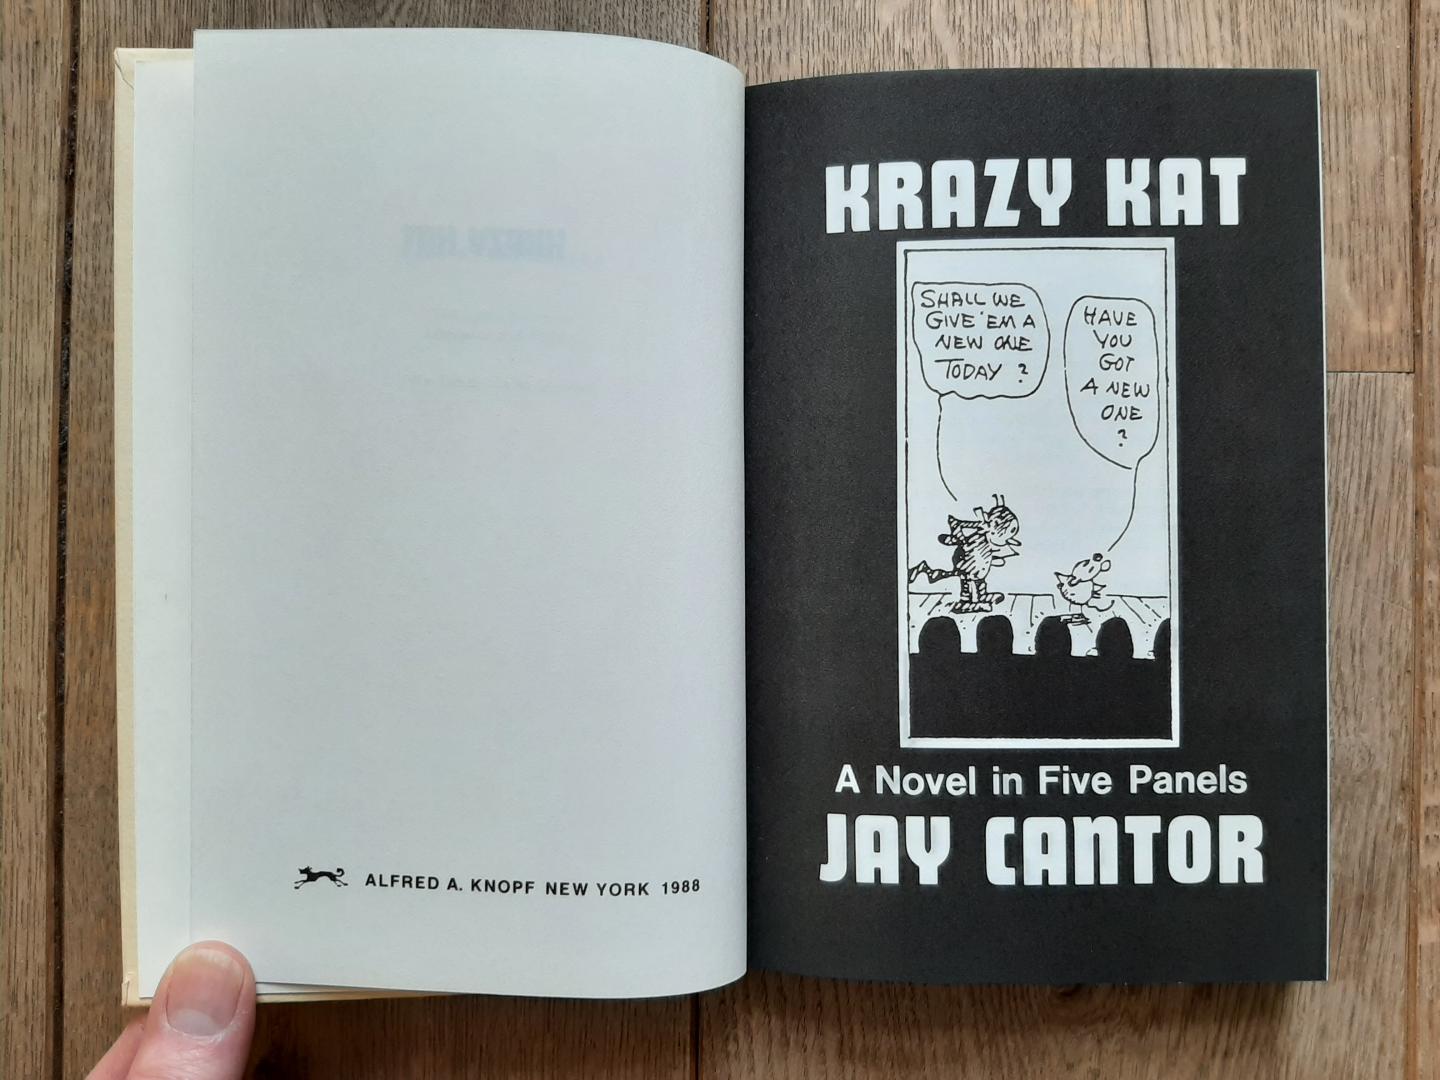 Cantor, Jay - Krazy Kat. A Novel in Five Panels